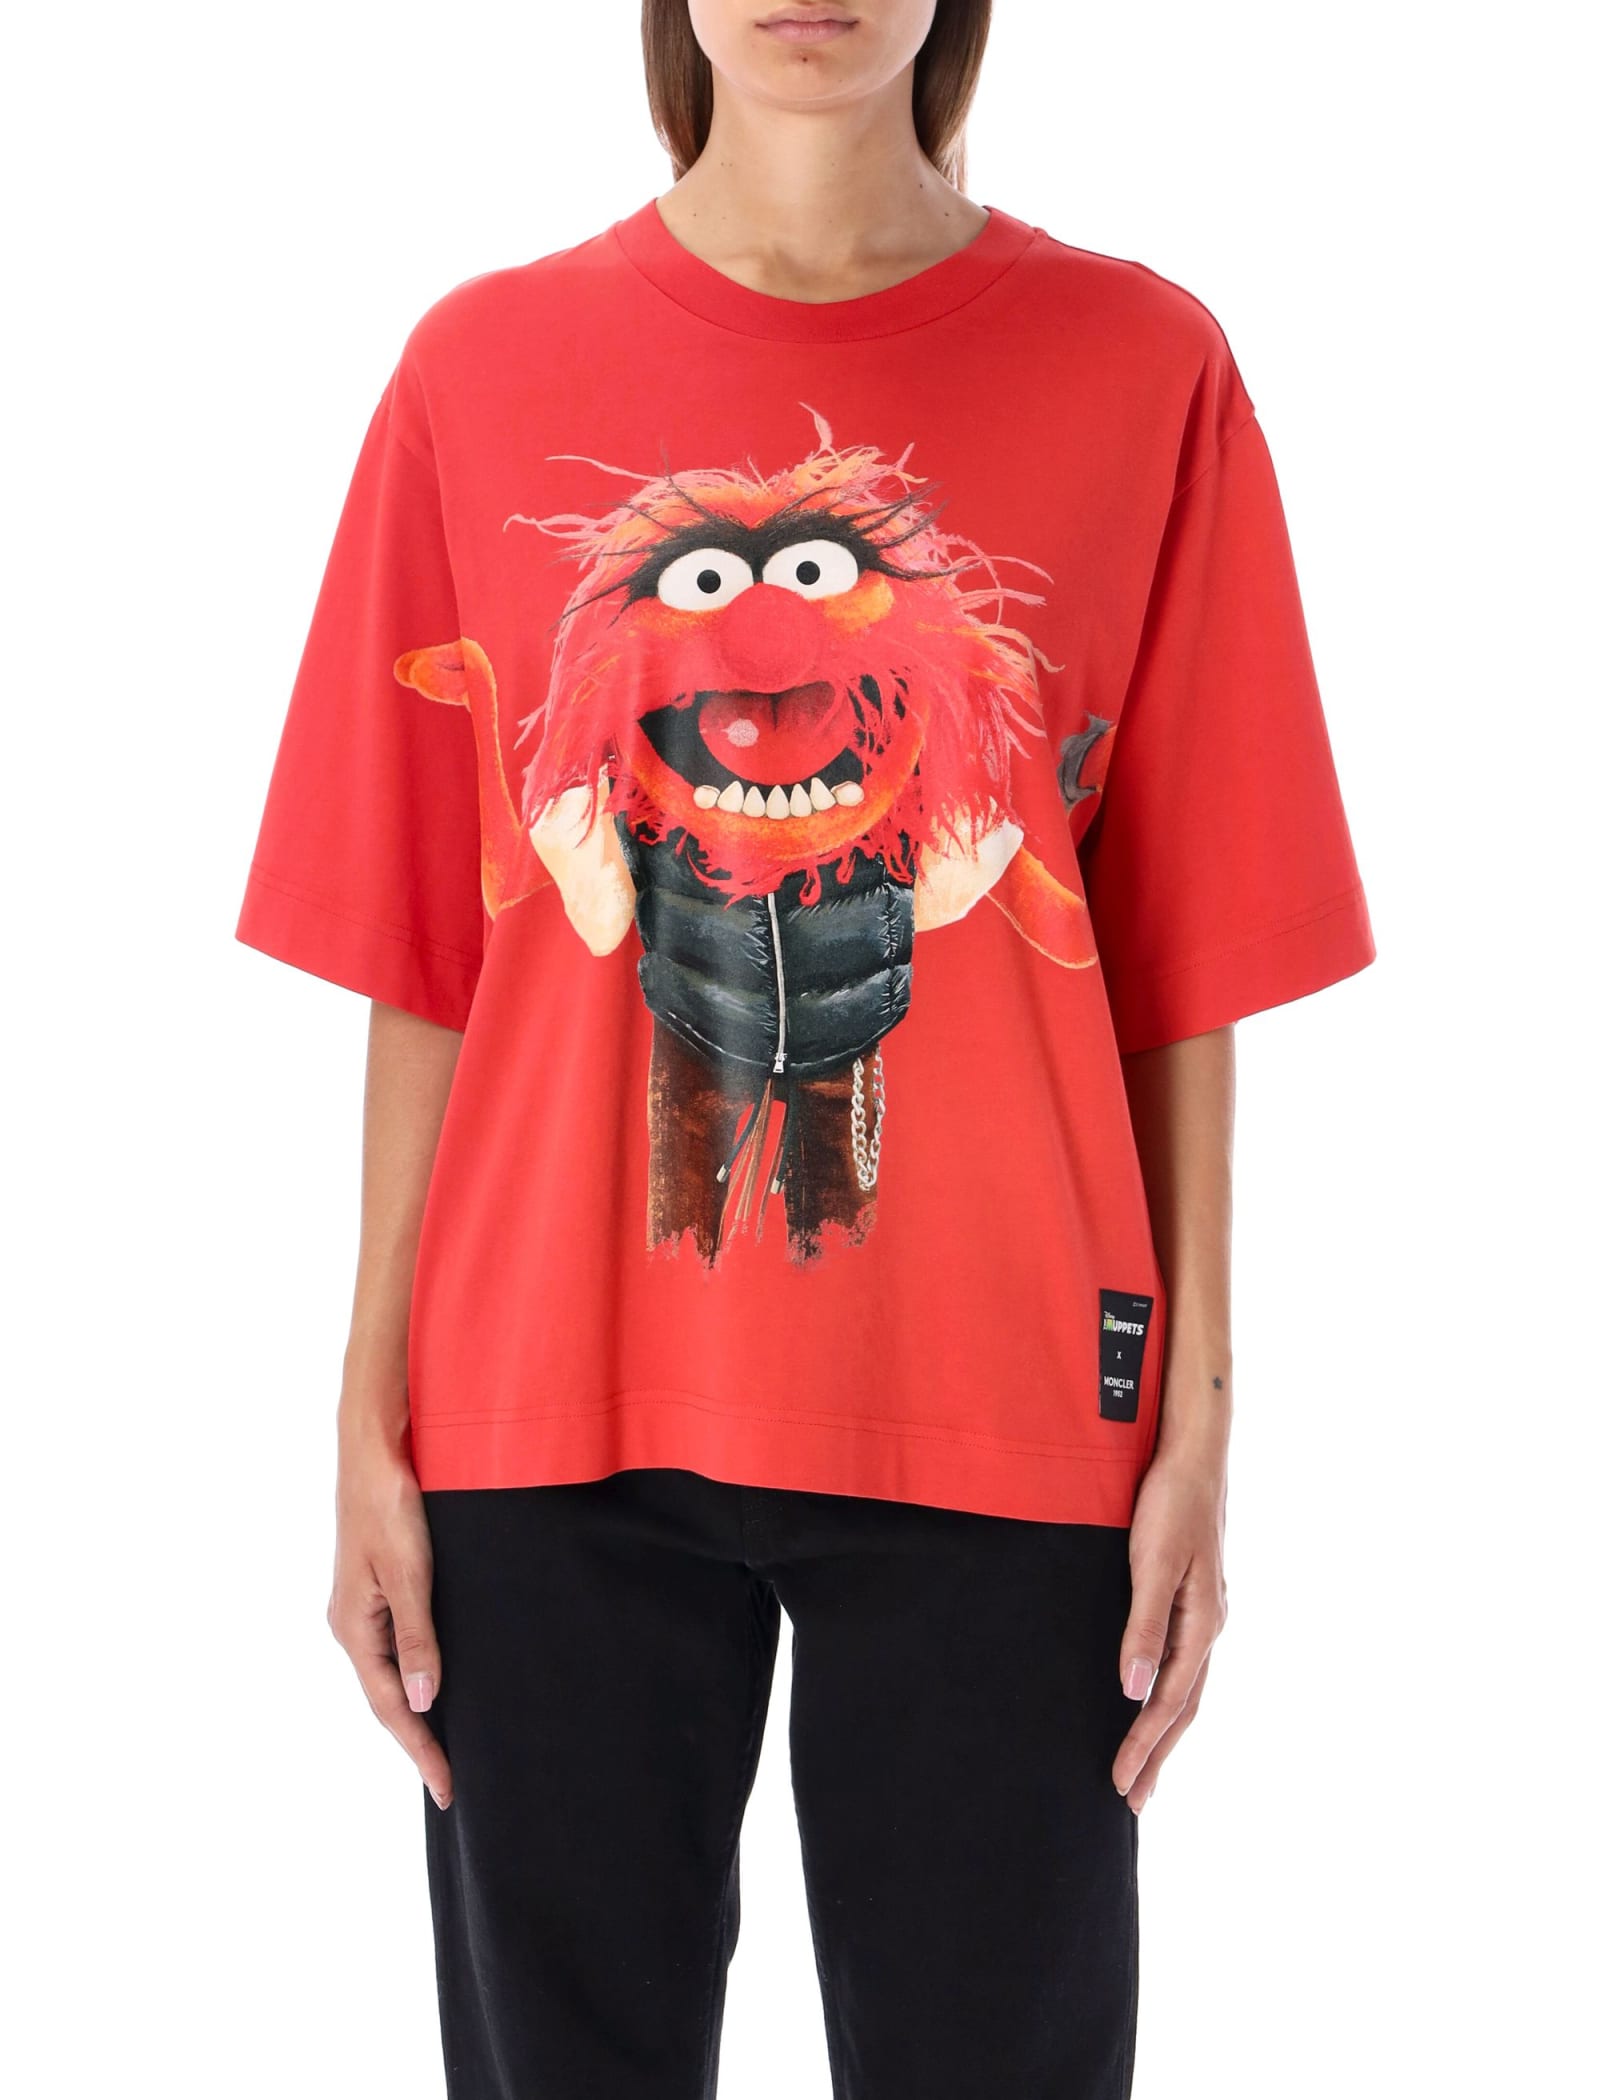 Moncler Genius The Muppets Motif T-shirt